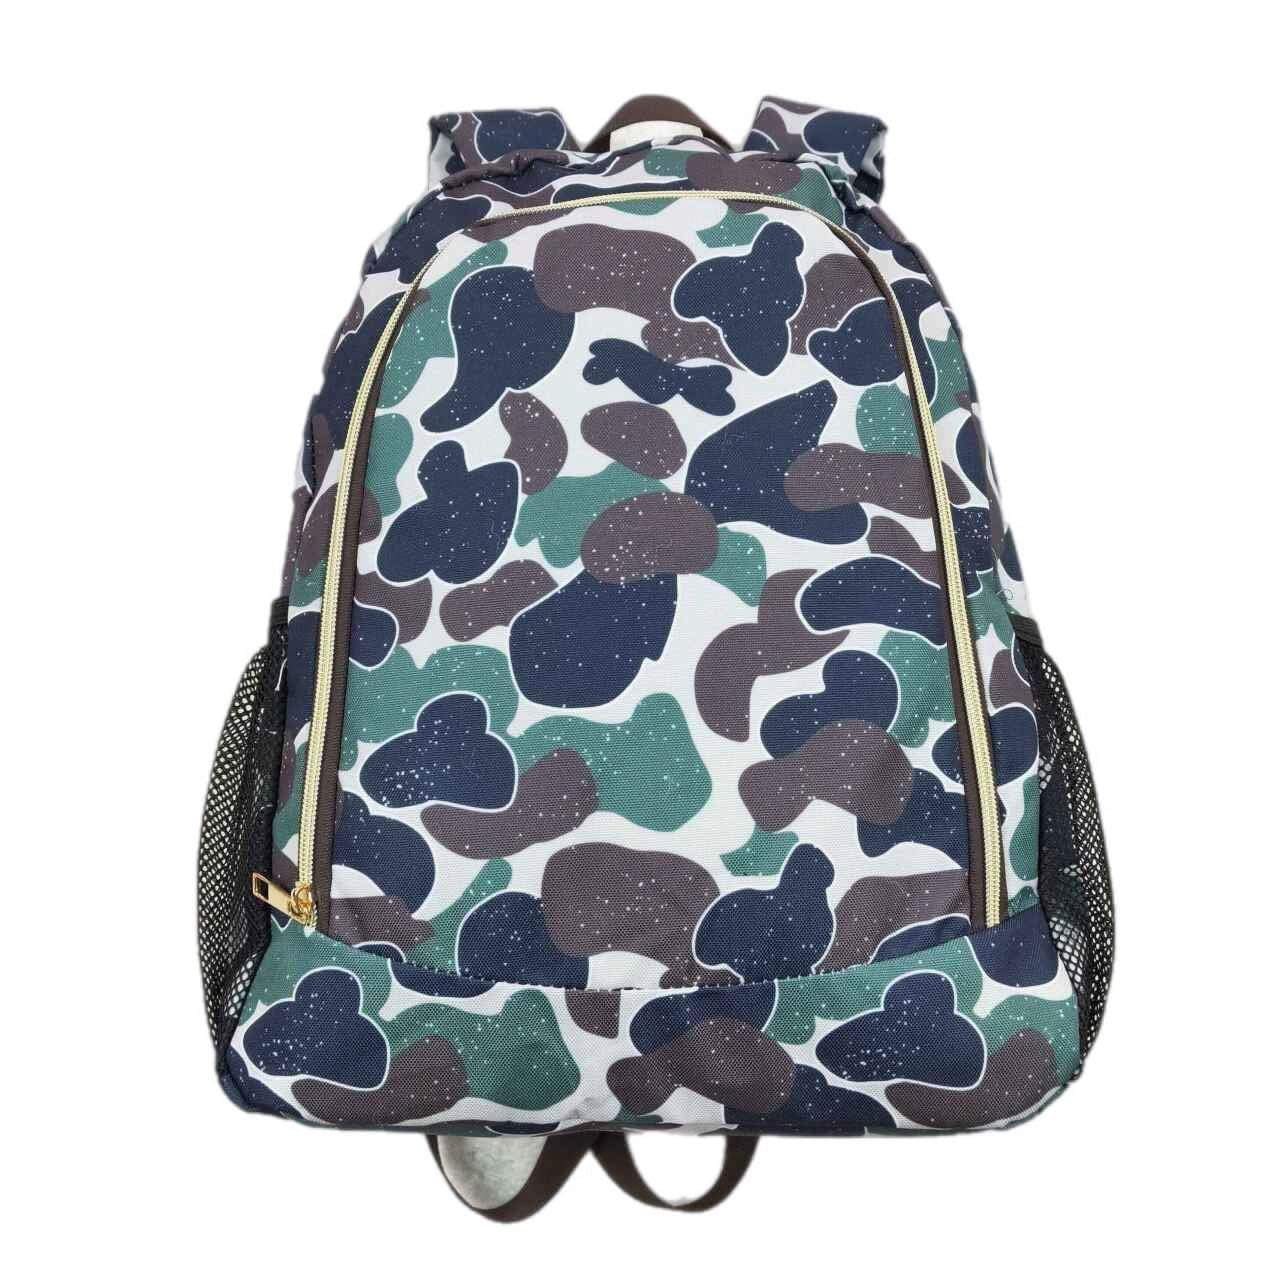 ᴡᴇᴇᴋʟʏ ᴘʀᴇ ᴏʀᴅᴇʀ Backpack- Camo 10x14x4